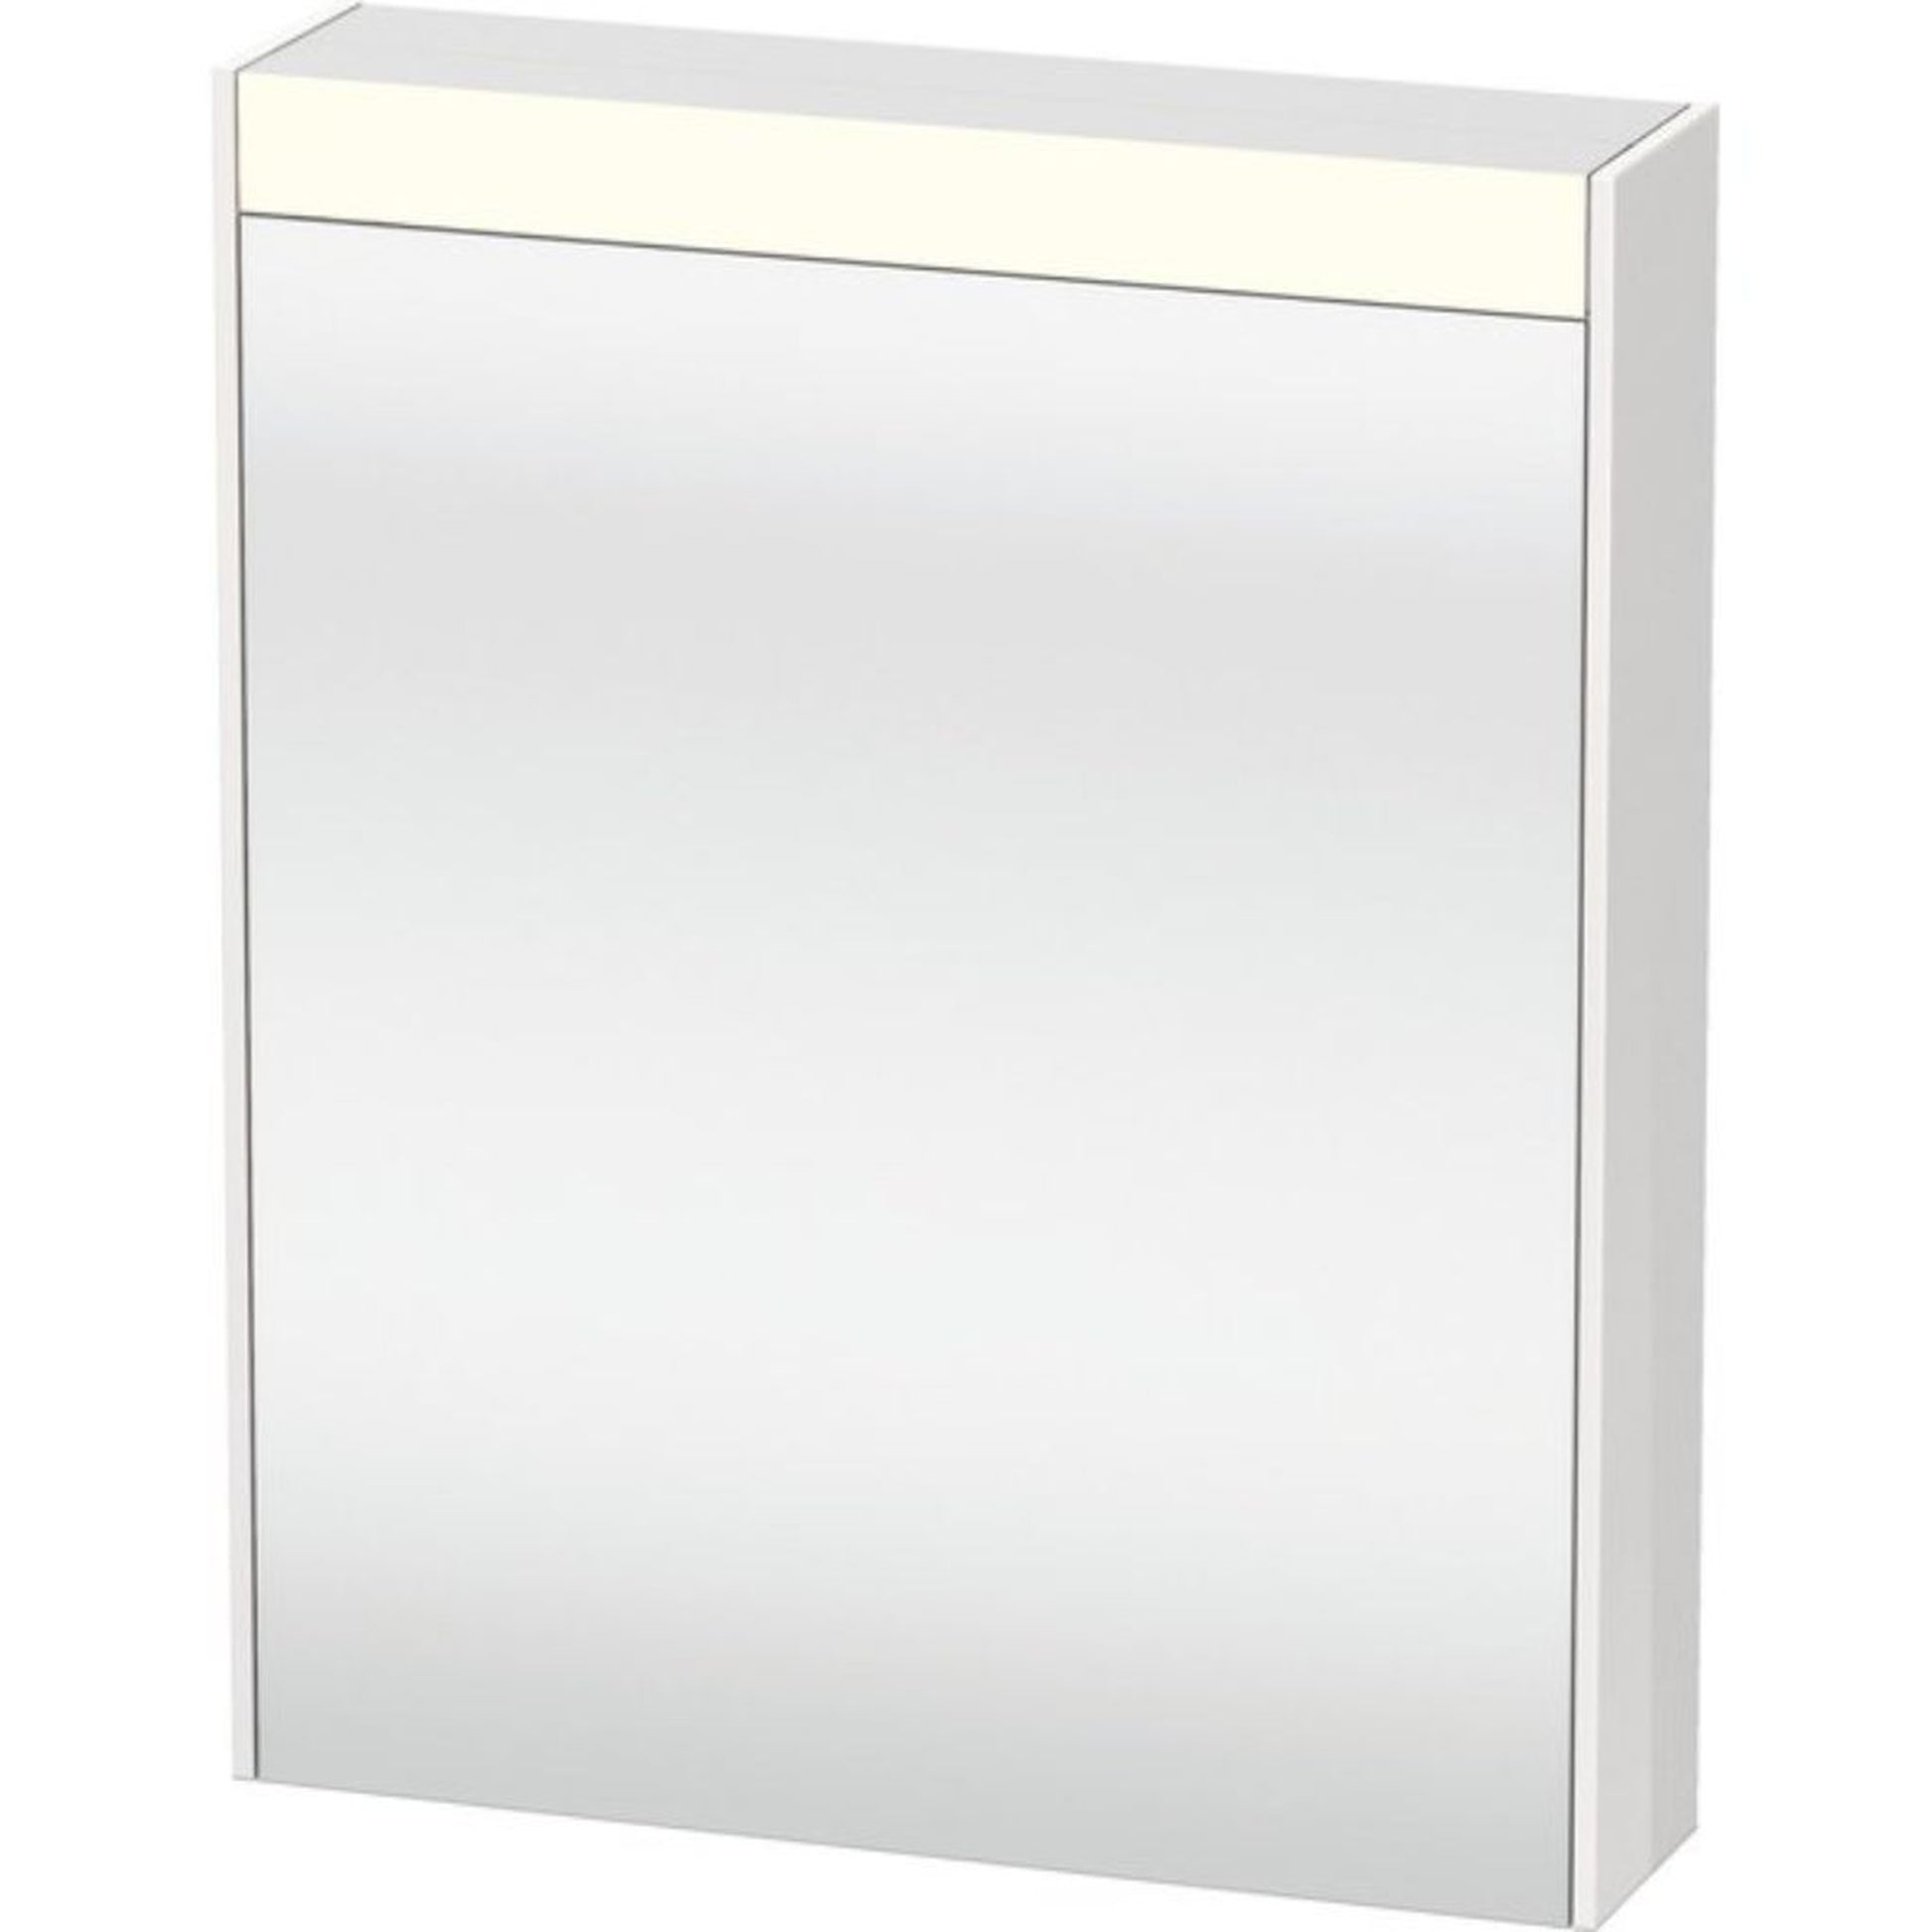 Duravit Brioso 24" x 30" x 6" Mirror With Left Hinge Cabinet and Lighting White High Gloss